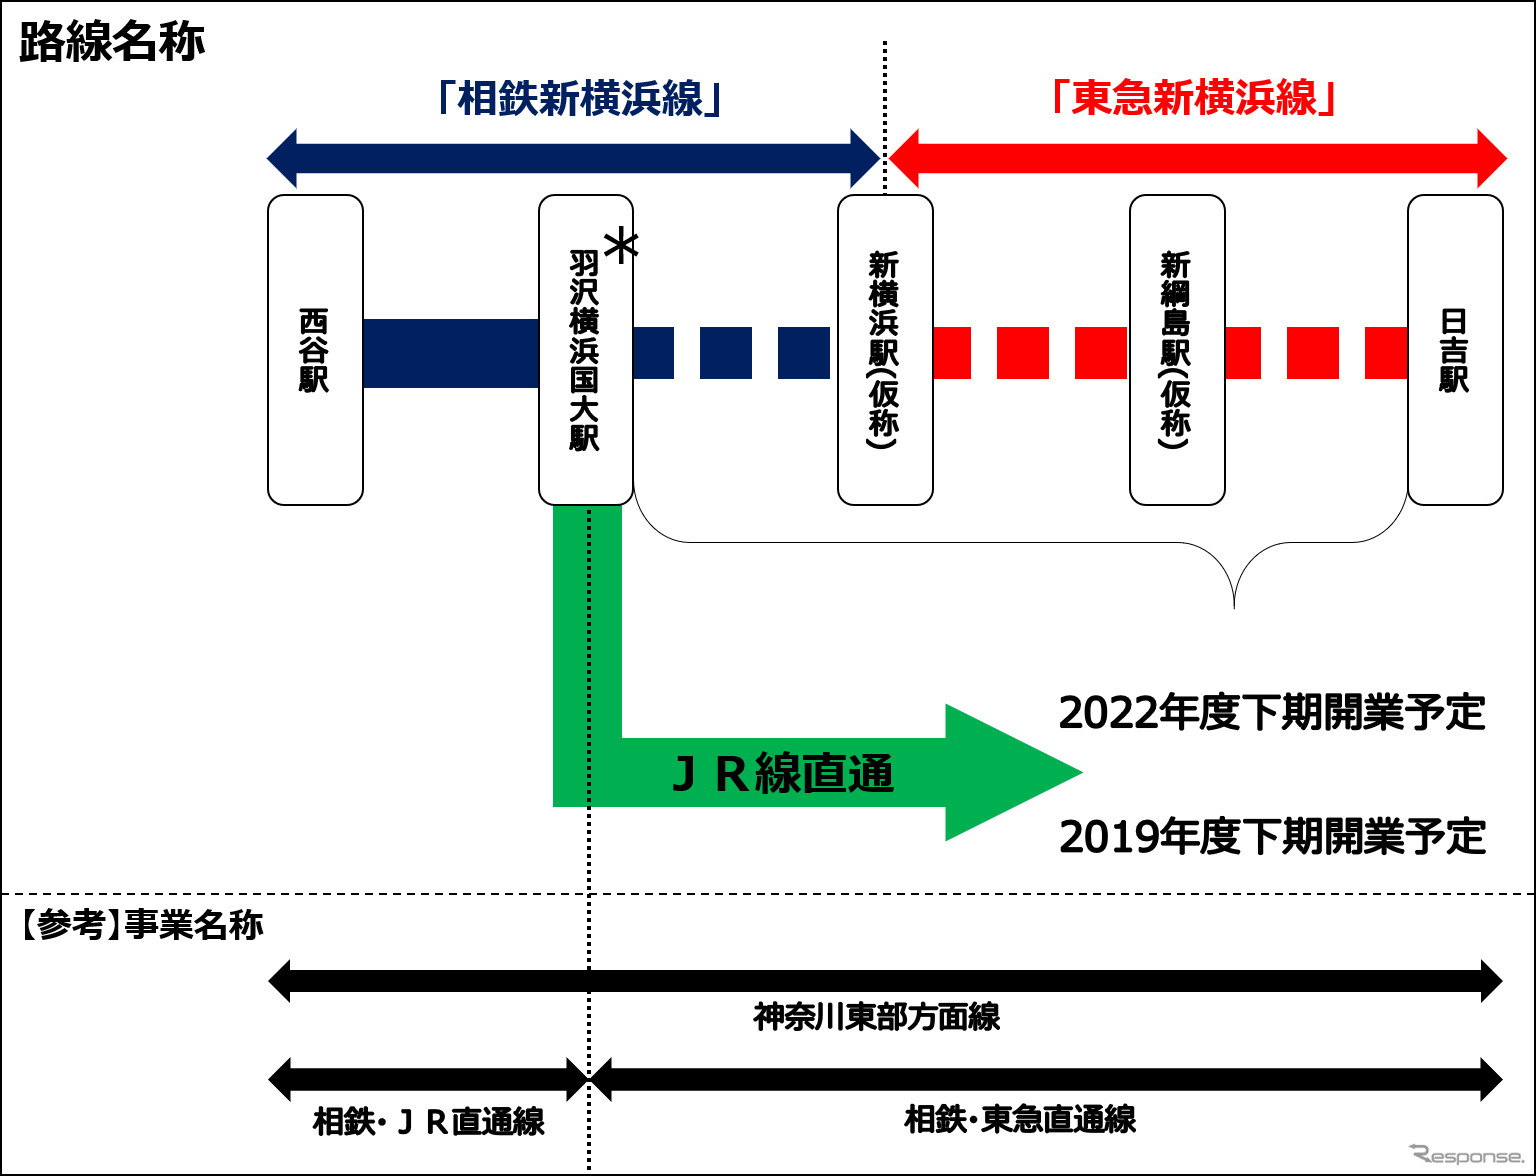 新横浜駅（仮称）を境に「相鉄新横浜線」「東急新横浜線」となる相鉄・東急直通線。